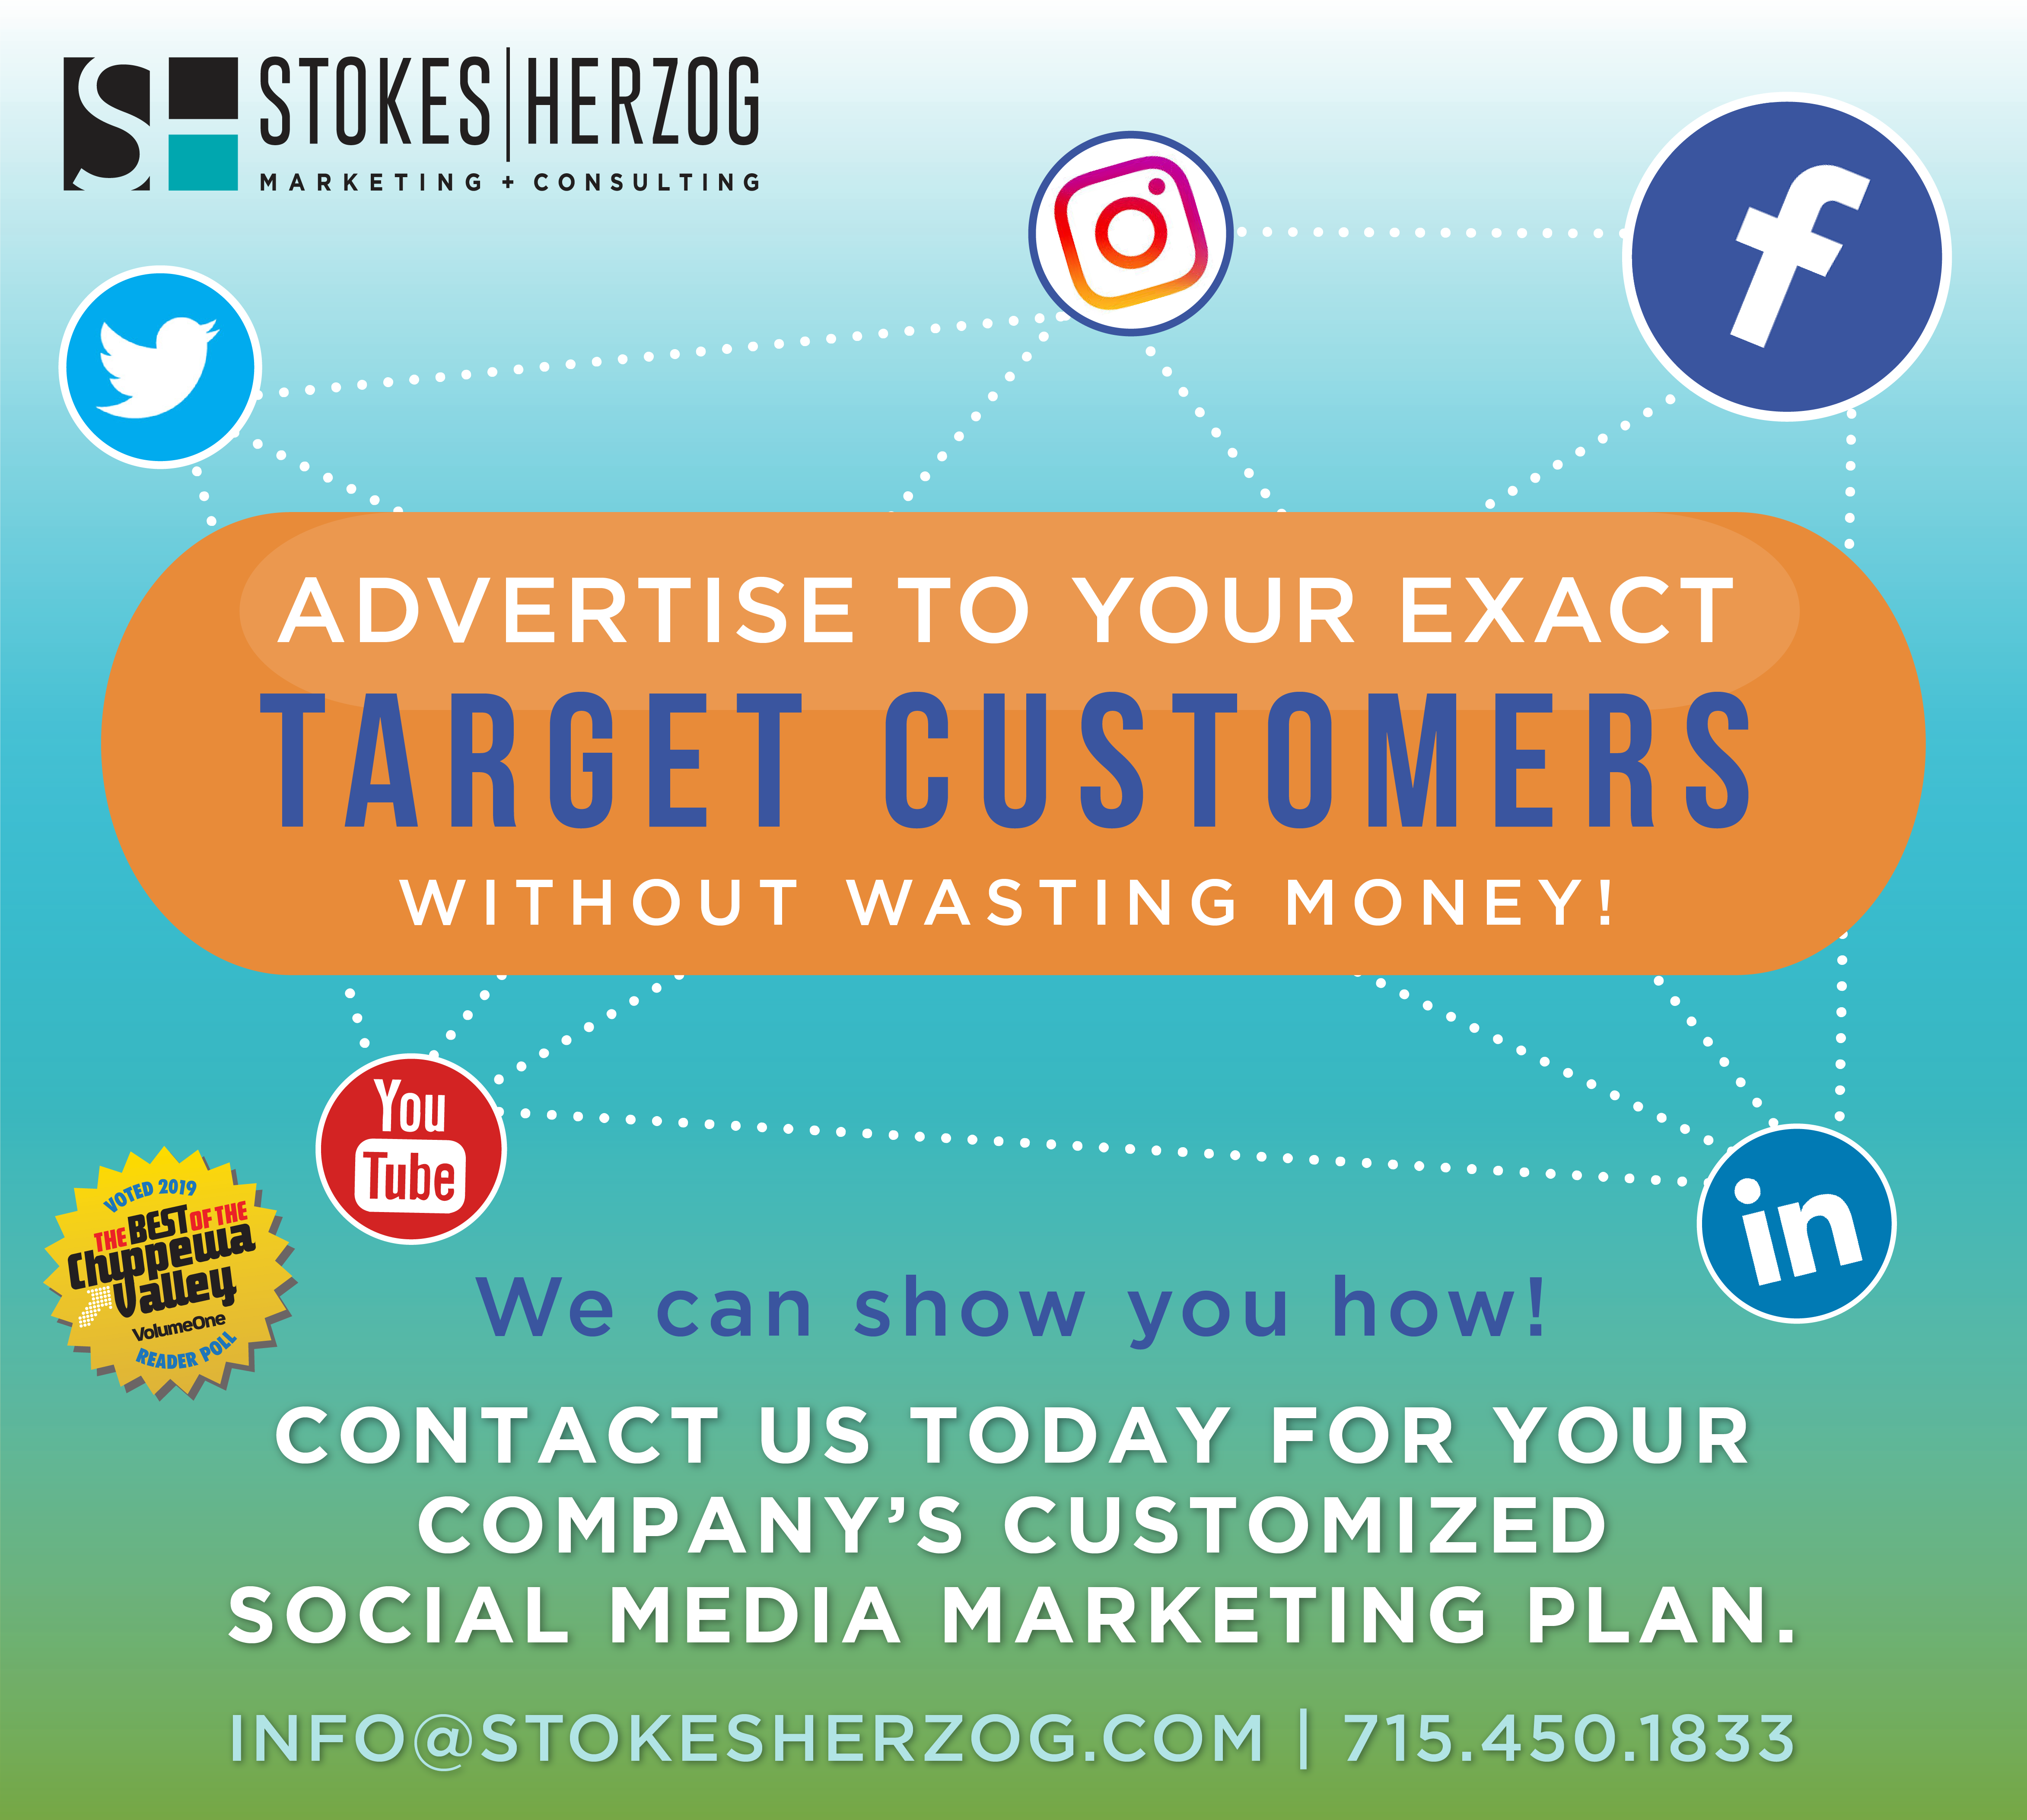 STOKES|HERZOG Marketing + Consulting